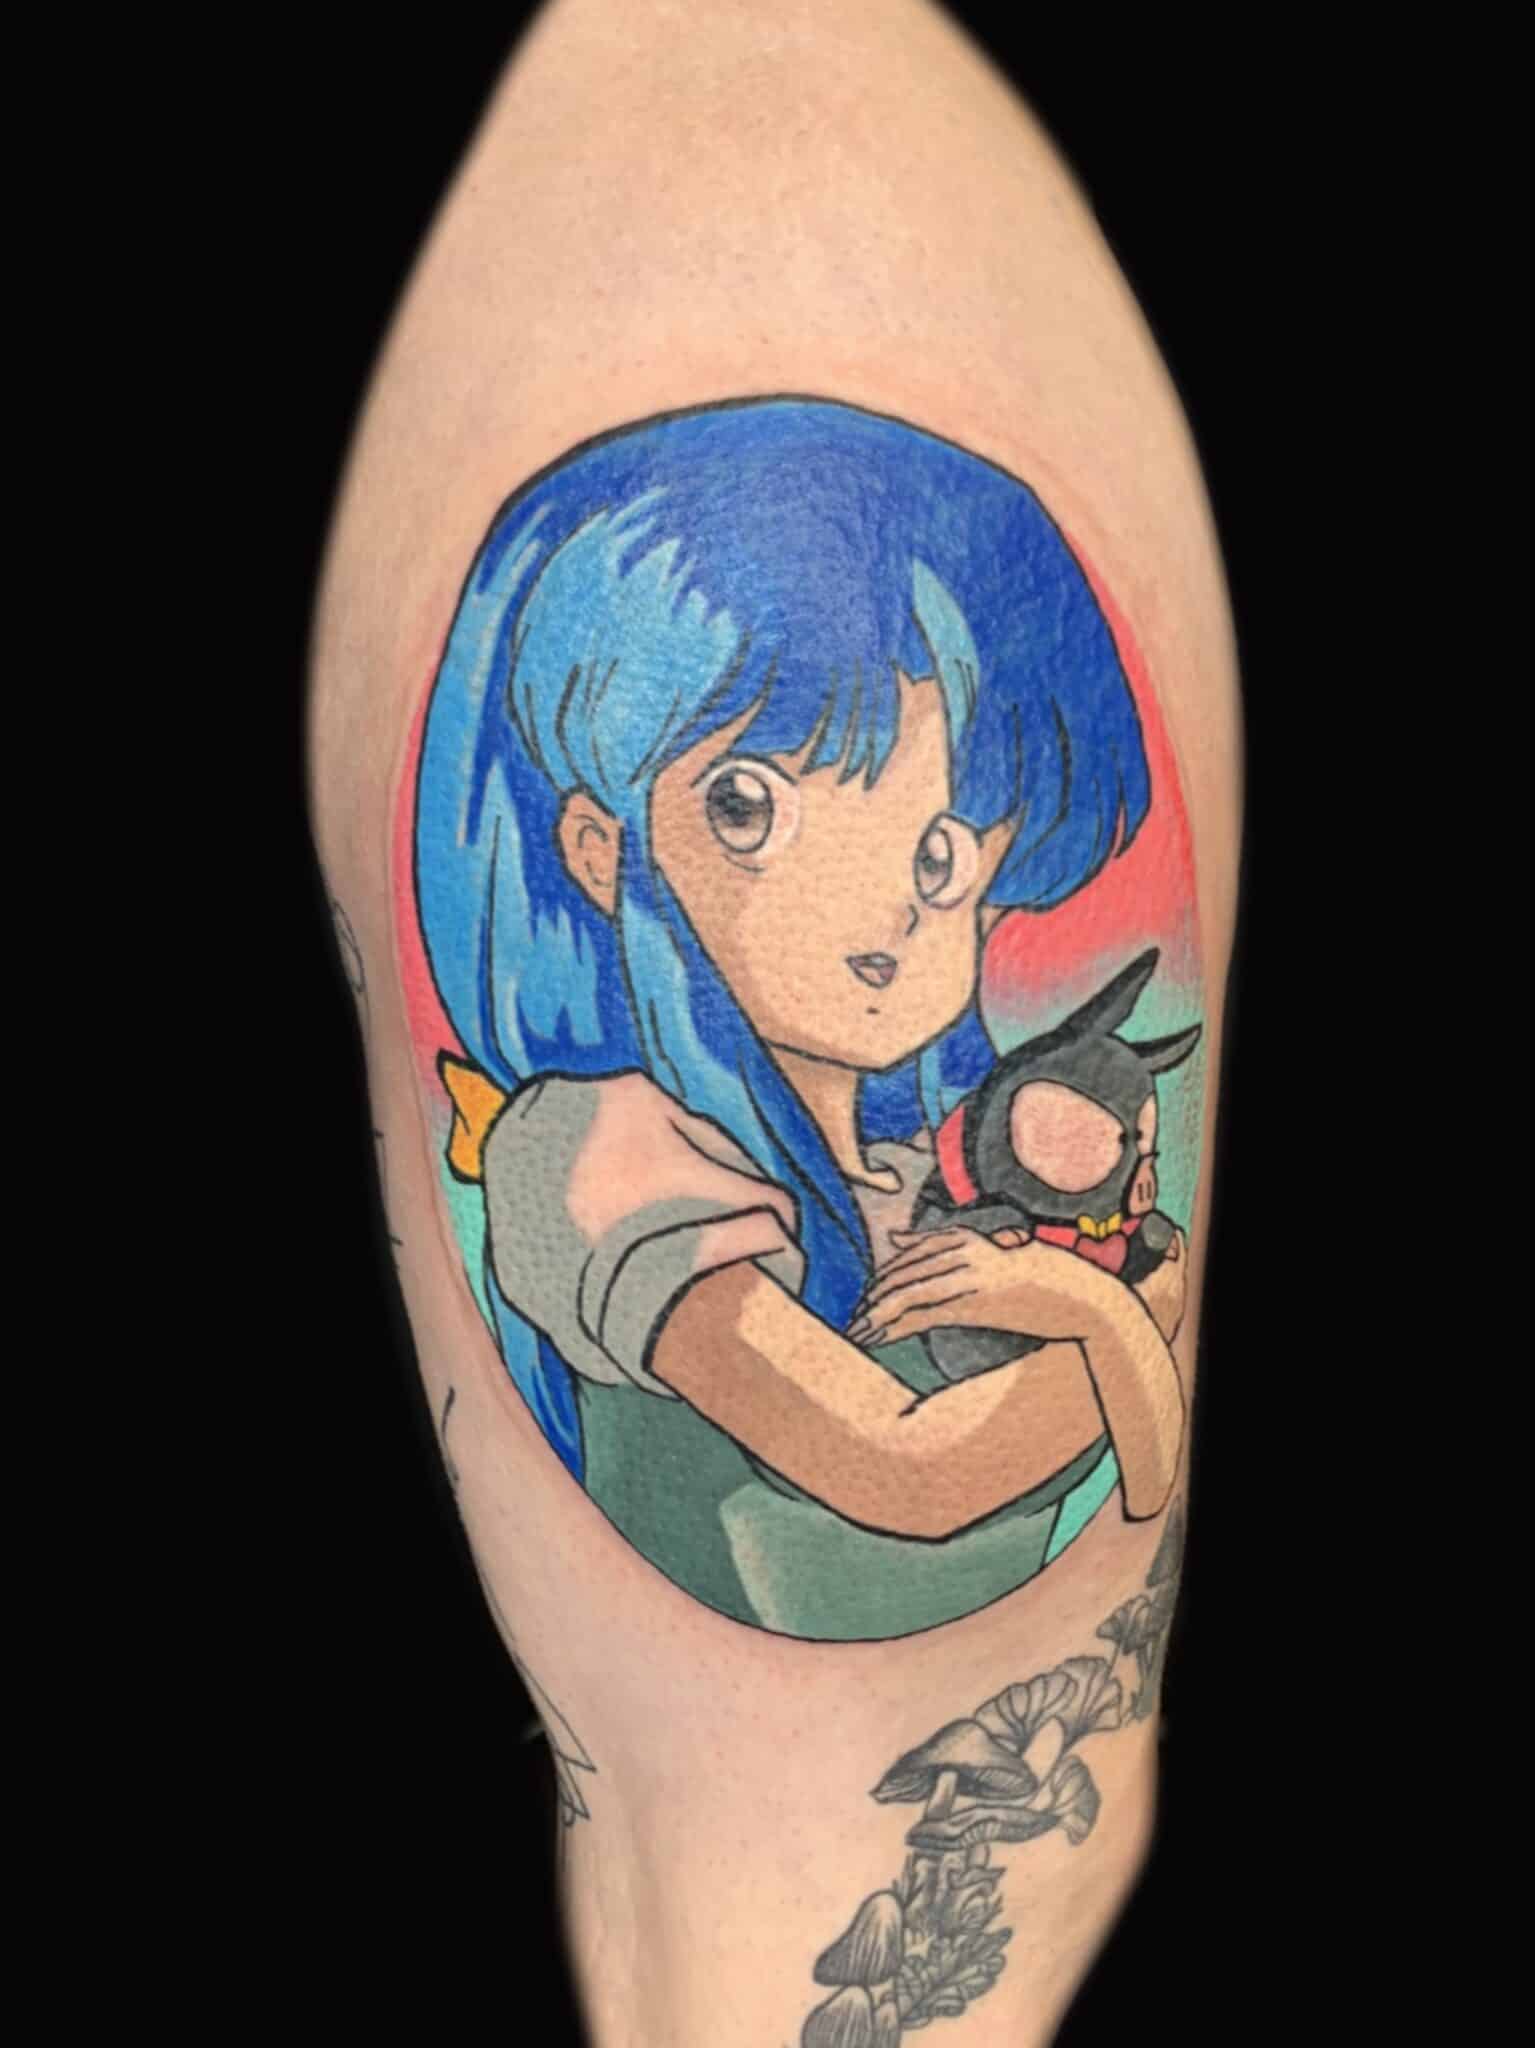 Anime tattoo design, Russell Loo, Artist at Revolt Tattoos